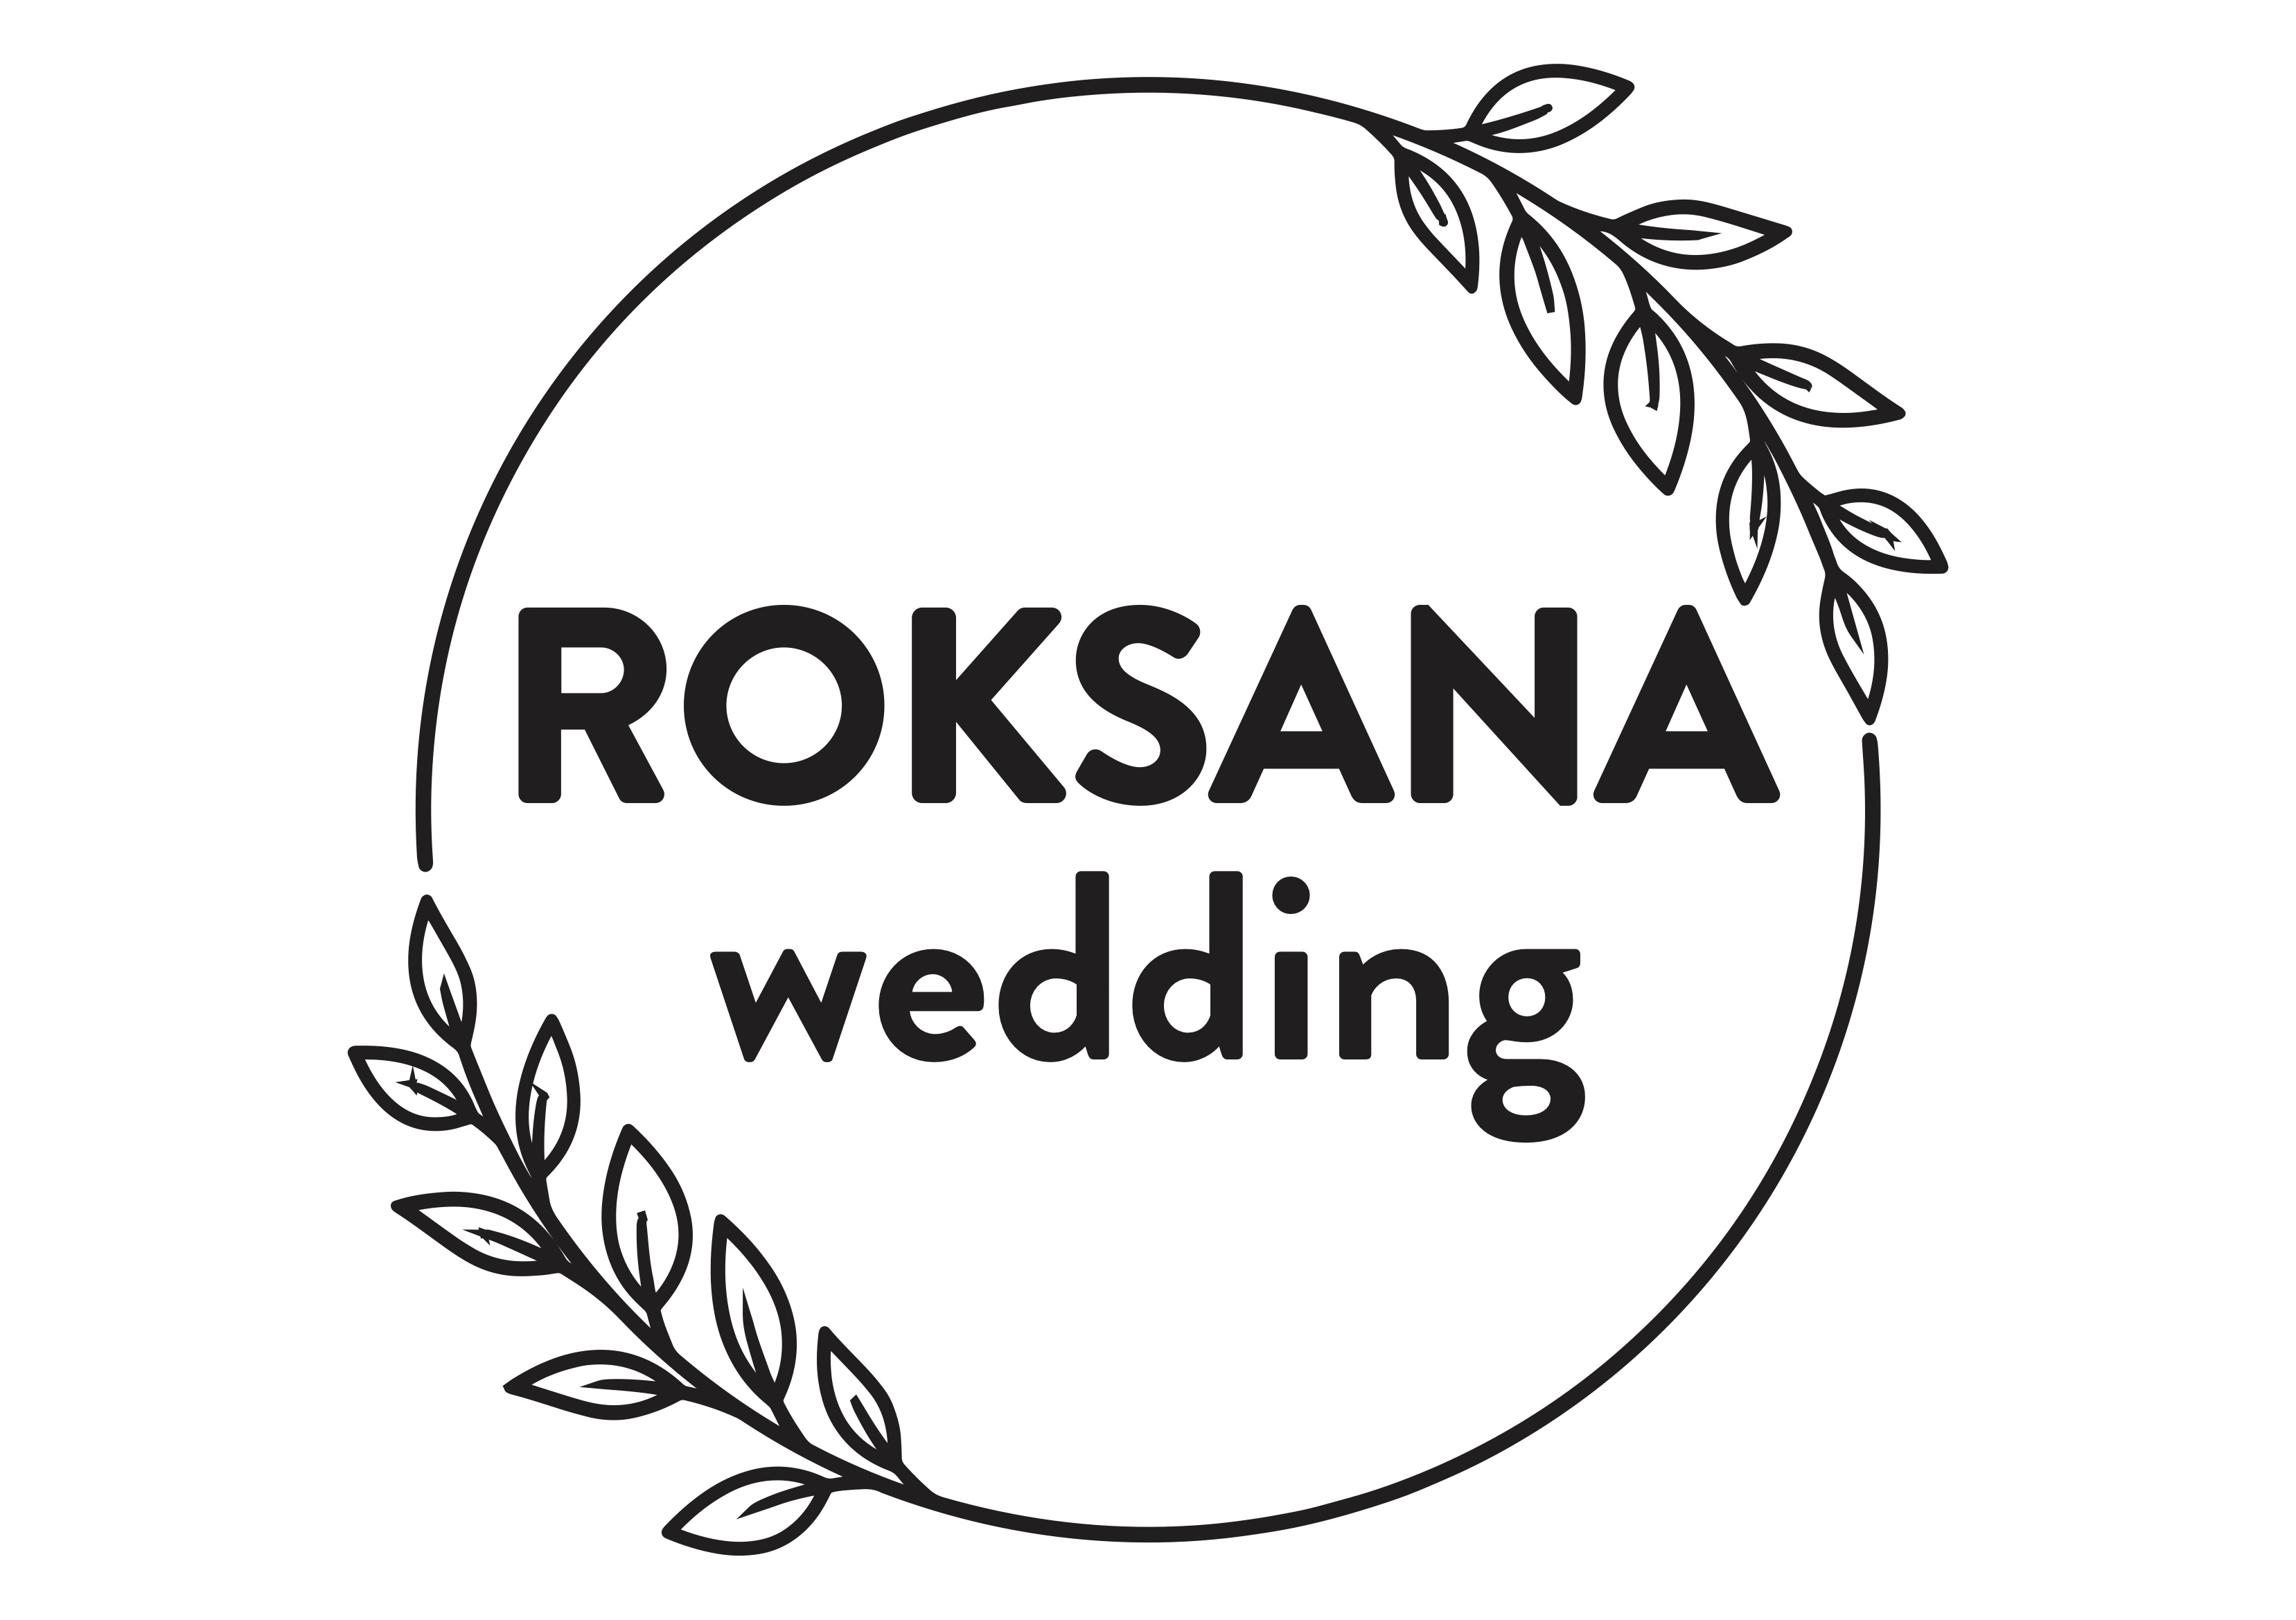 Roksana wedding